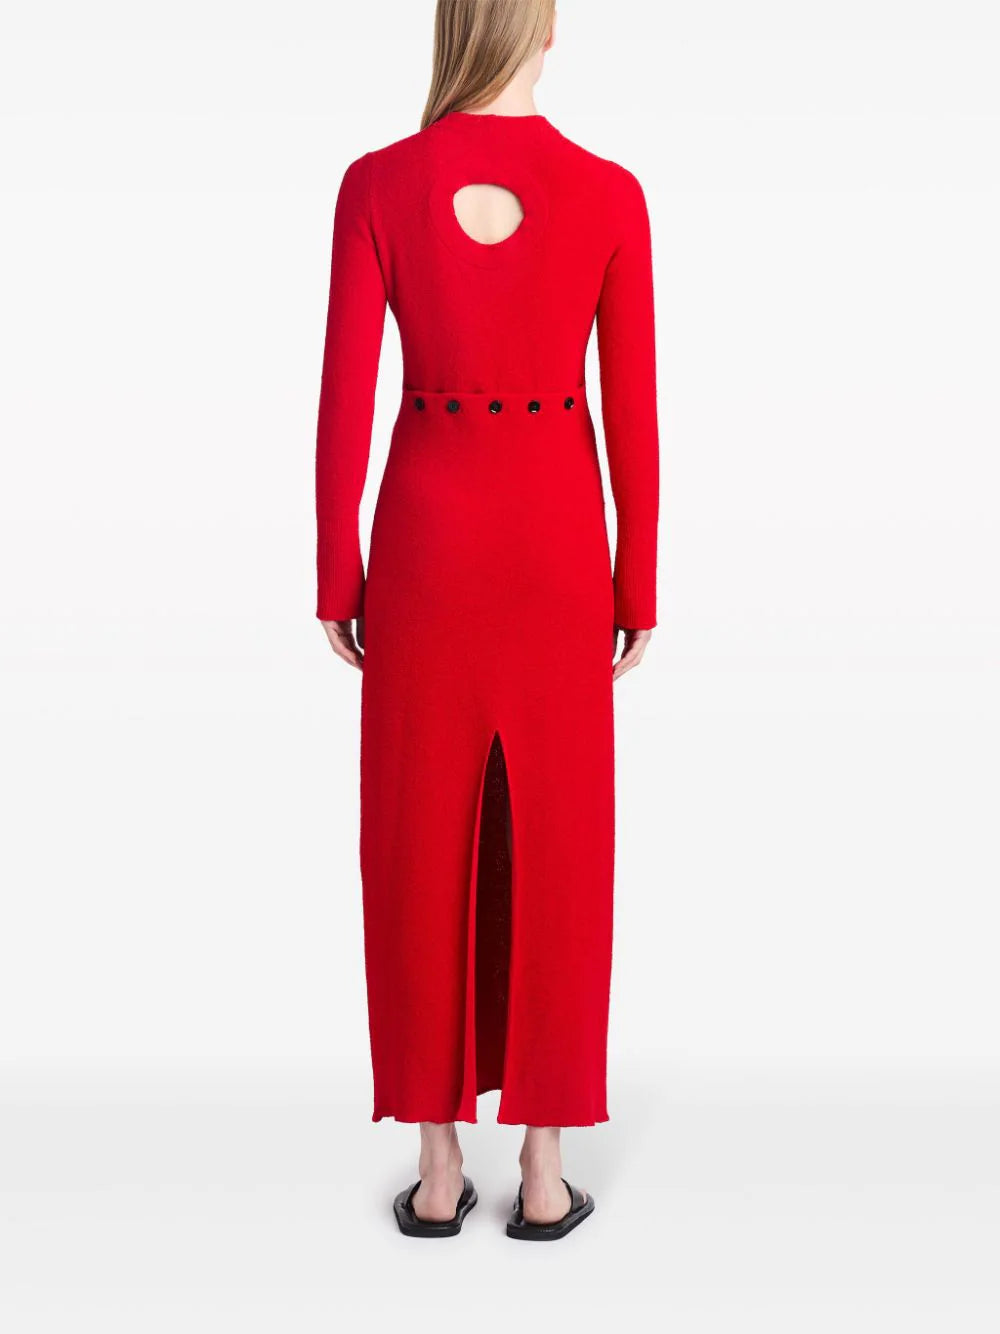 Lara Knit Dress in Red